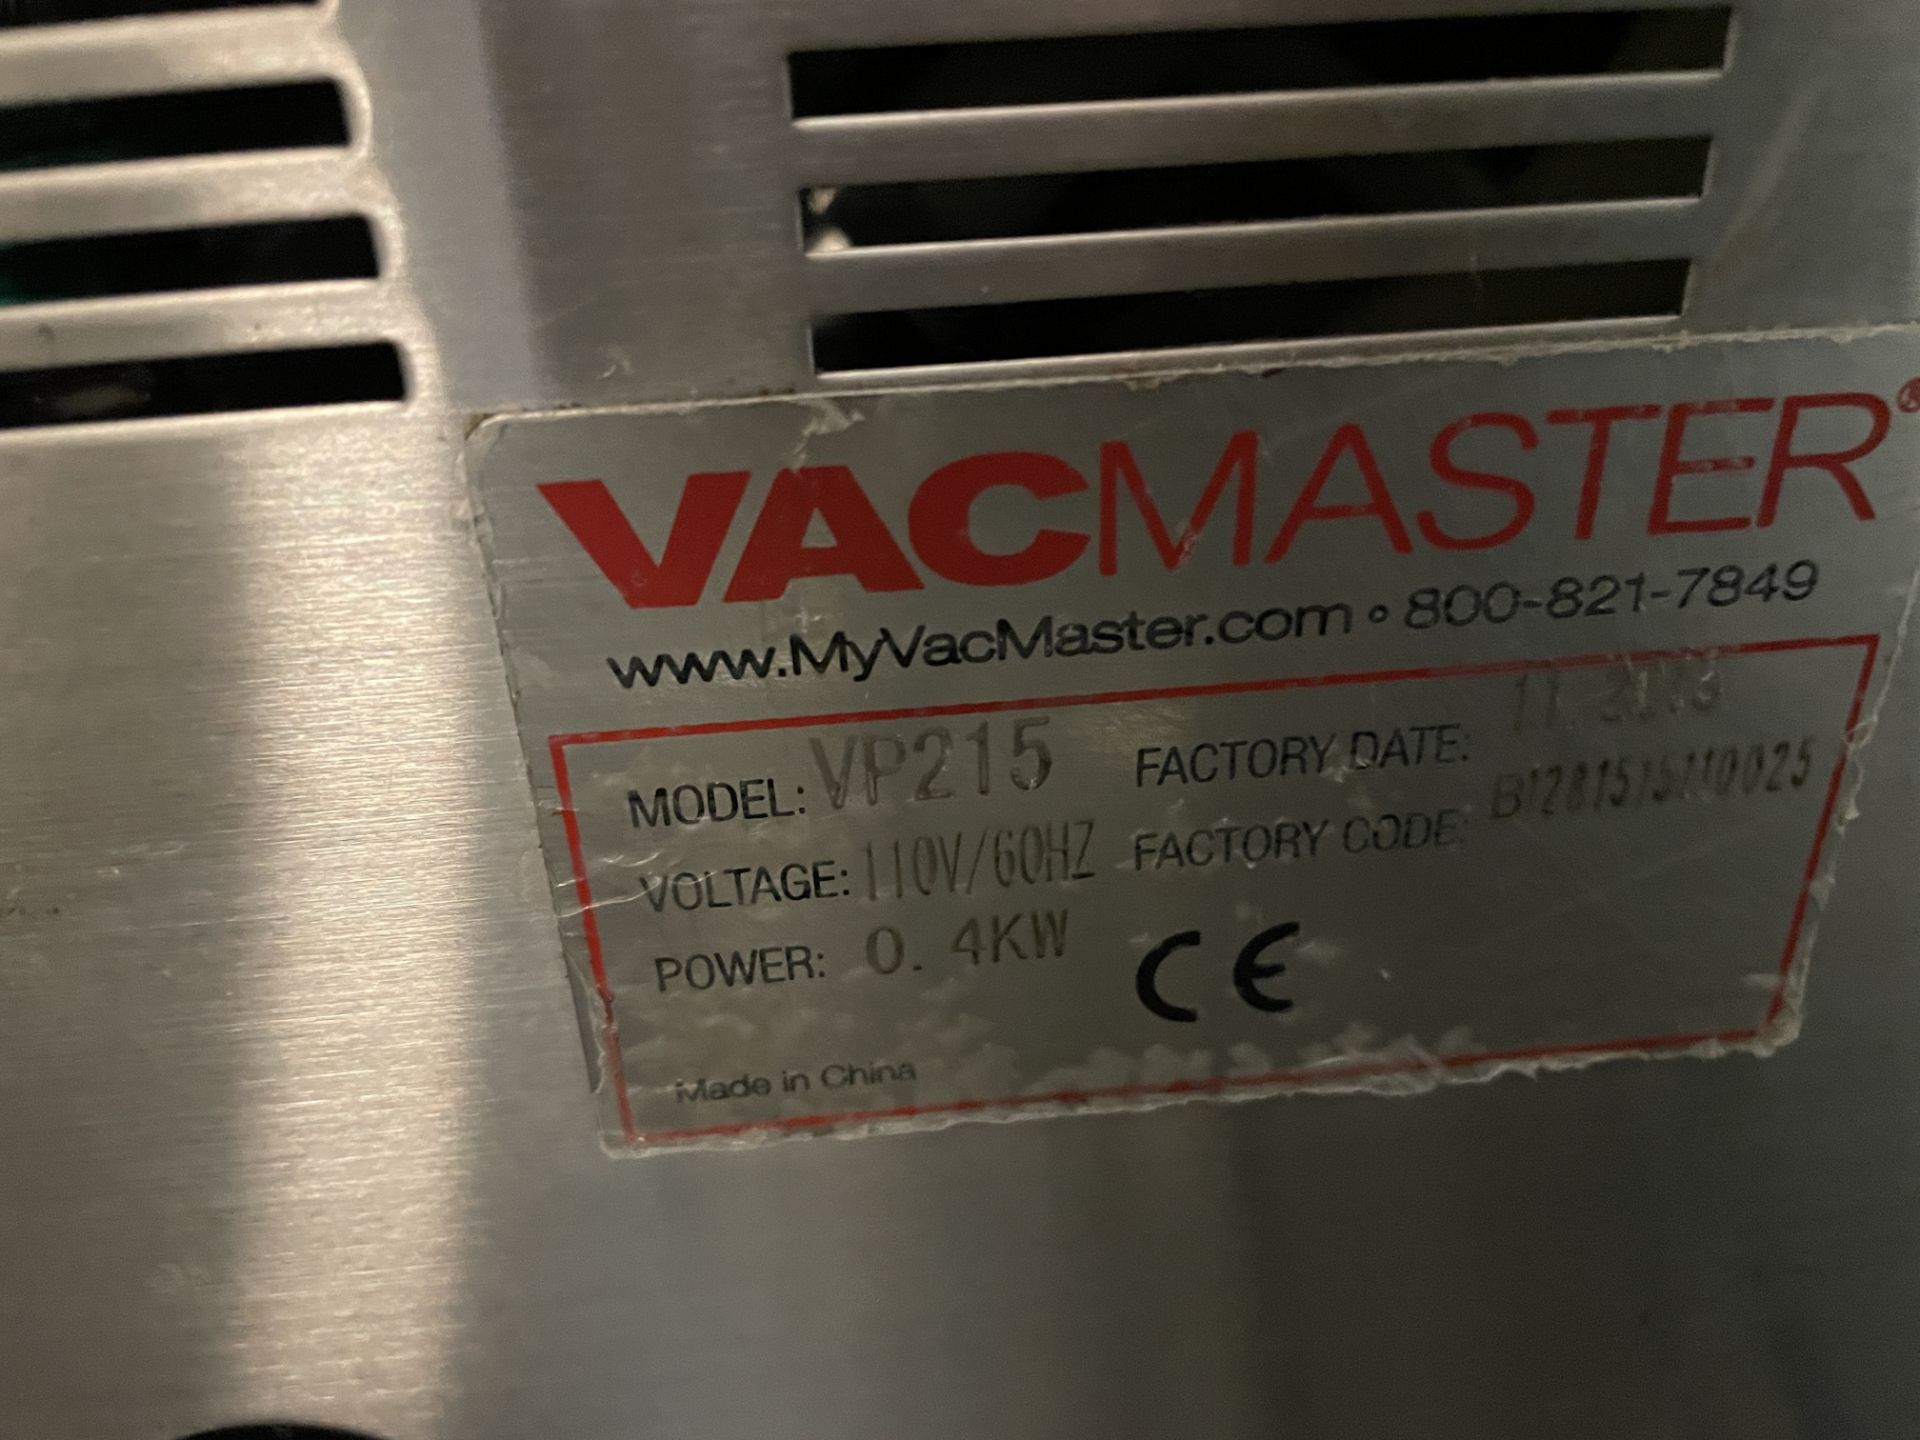 Vac Master #VP215 Electric Chamber Vacuum Sealer - Image 2 of 2